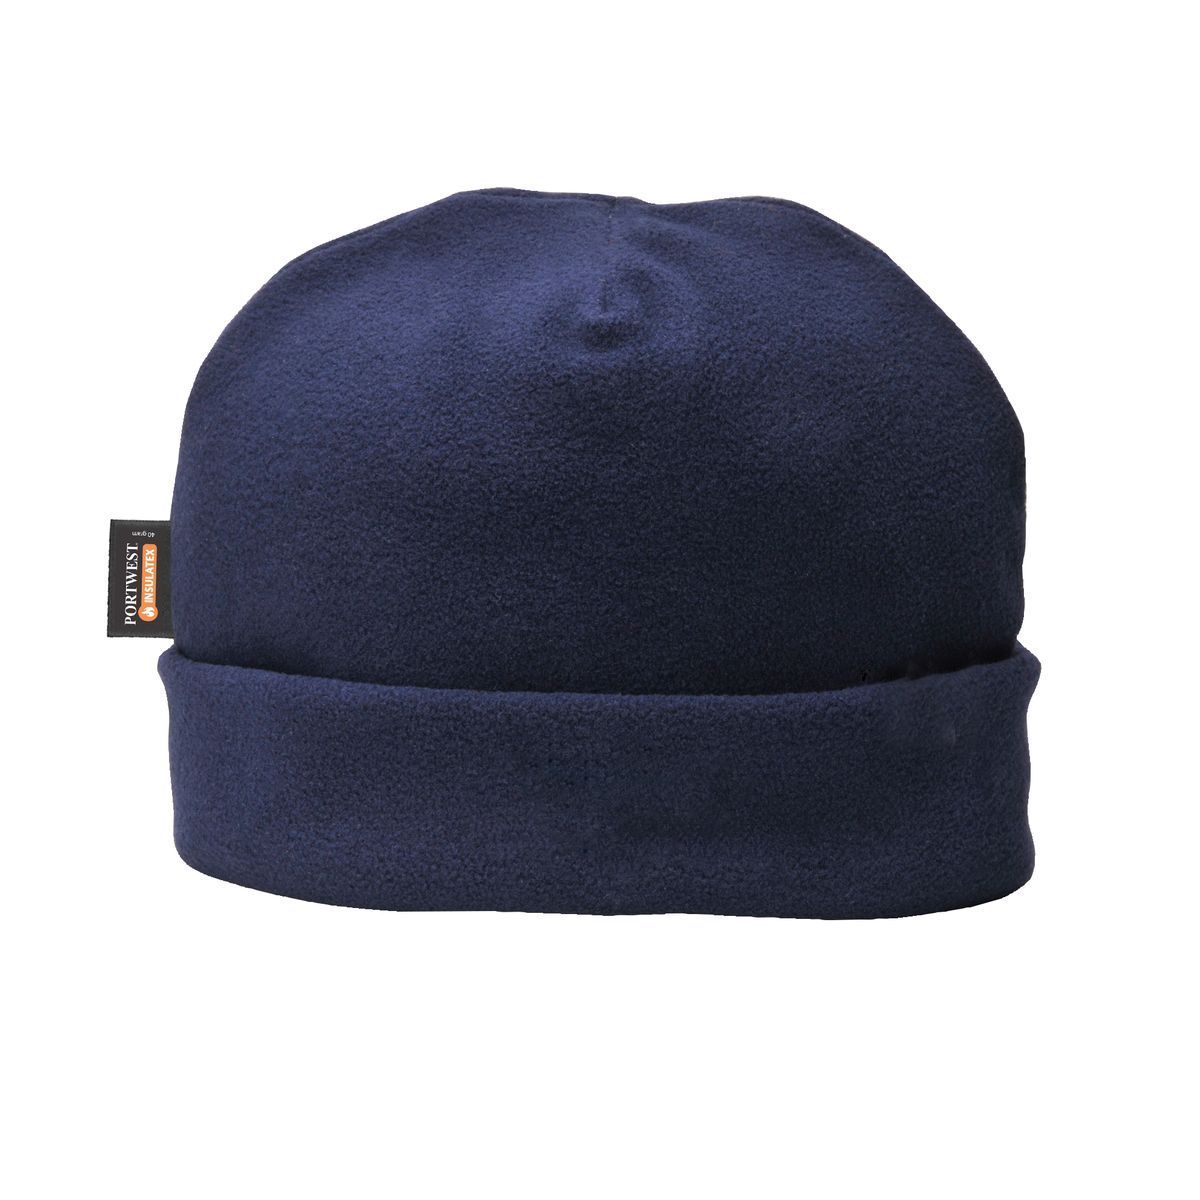 Style HA10 Insulatex Fleece Hat-1